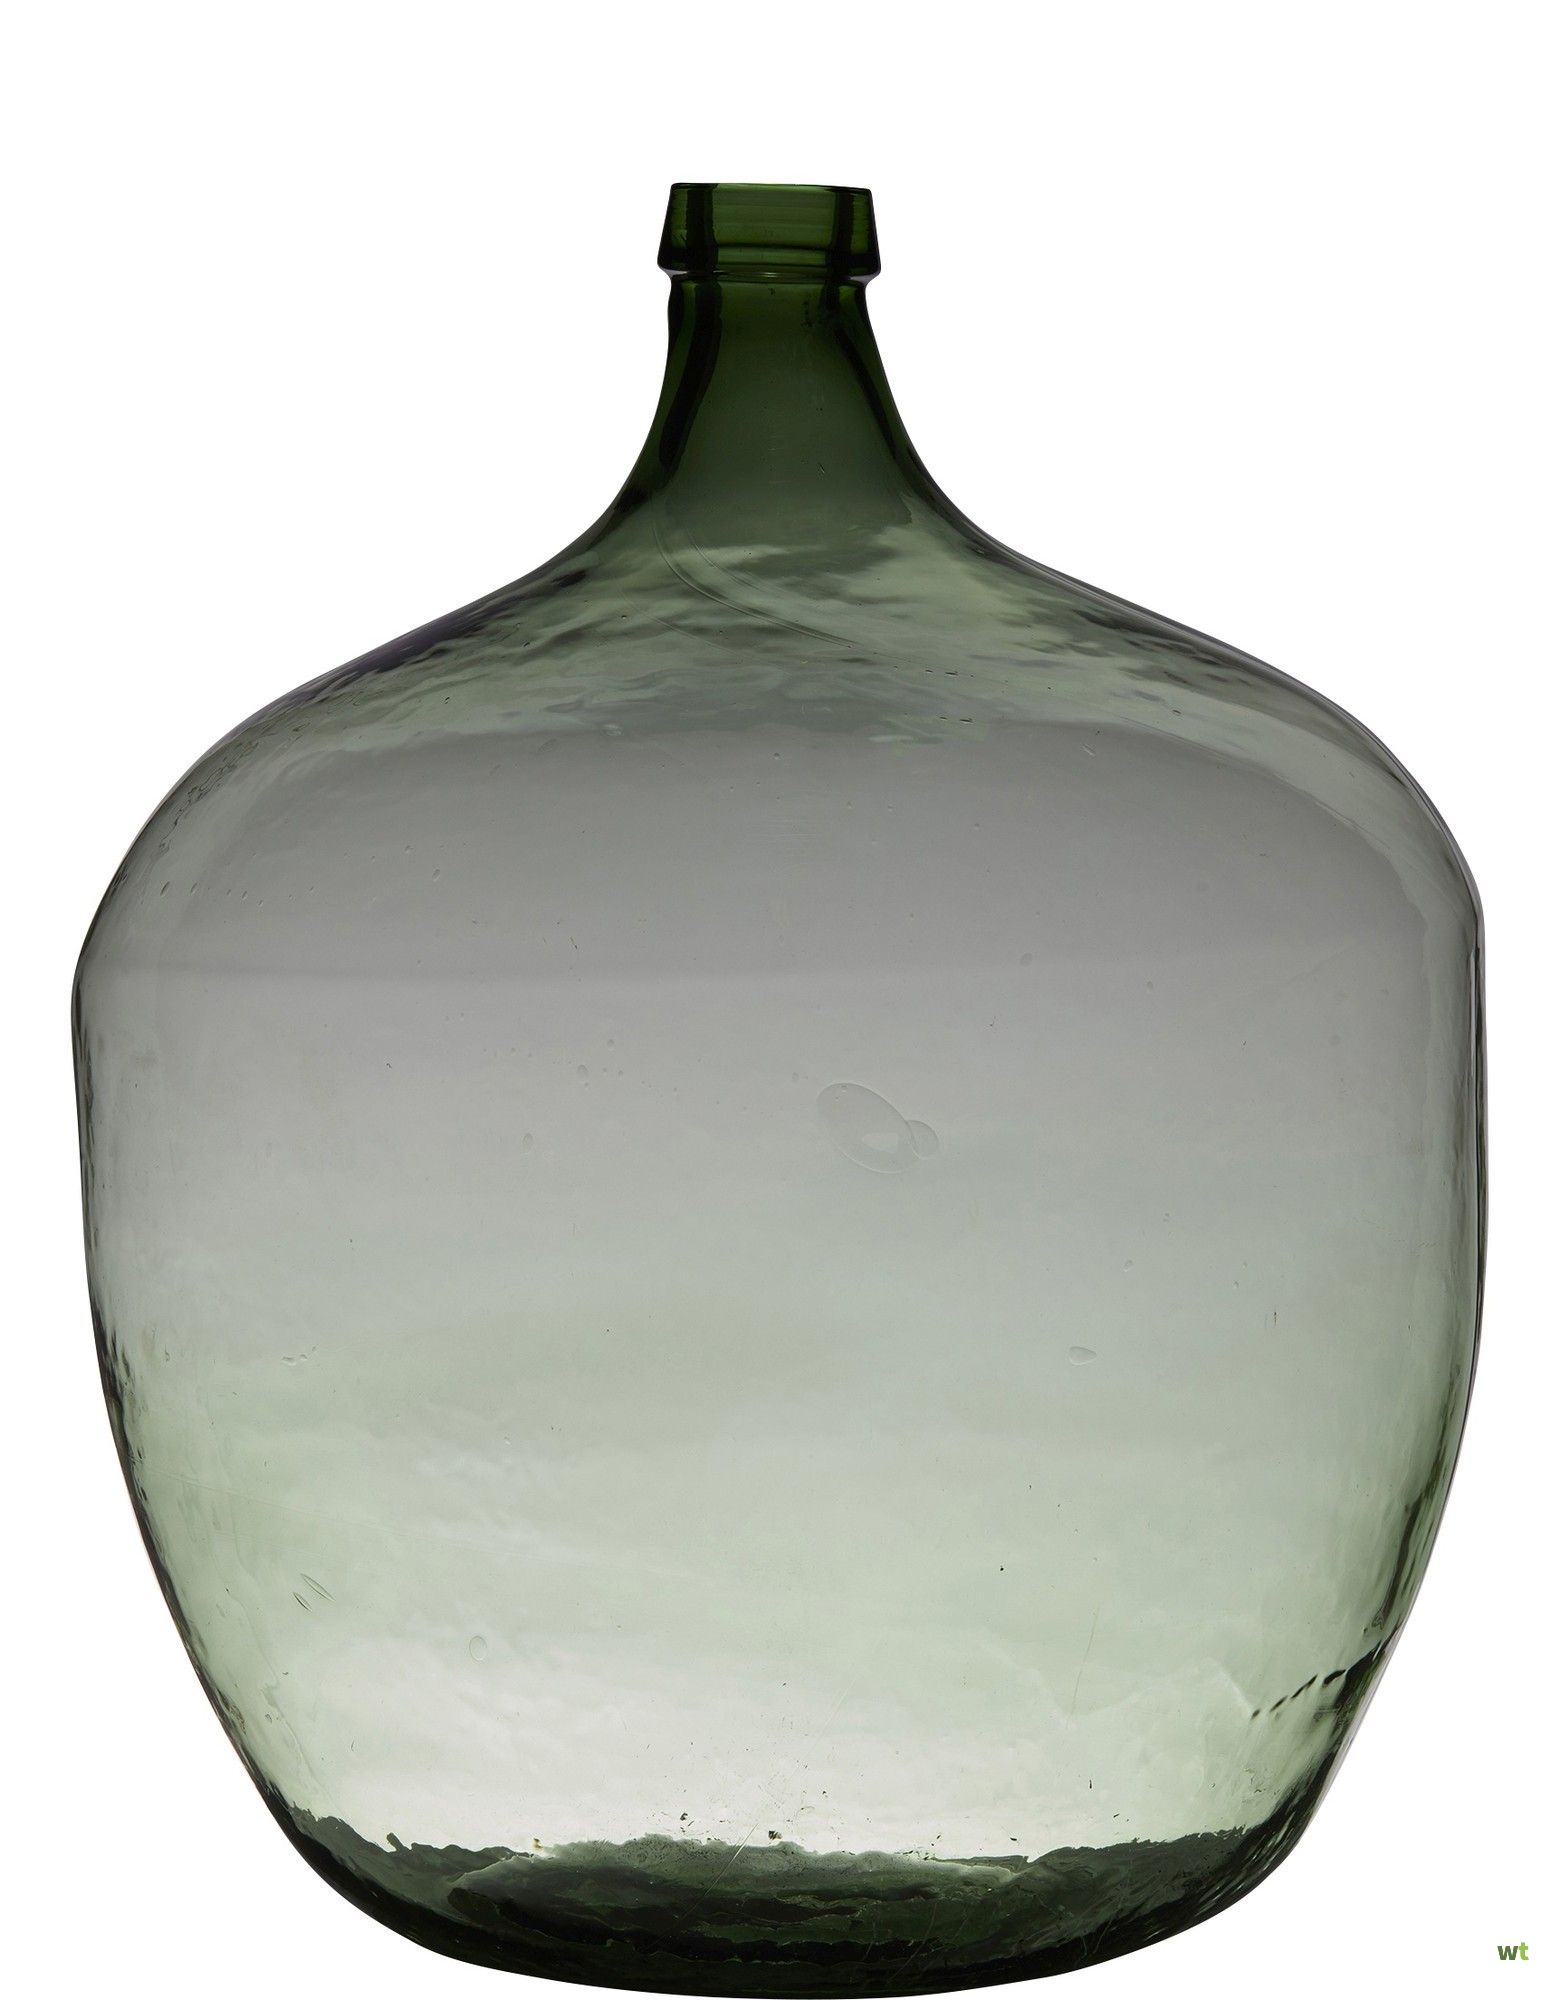 Fascineren Probleem Isaac Glas Kruik 50 liter h57 d43 handgemaakt recycled Green Hakbijl Glass